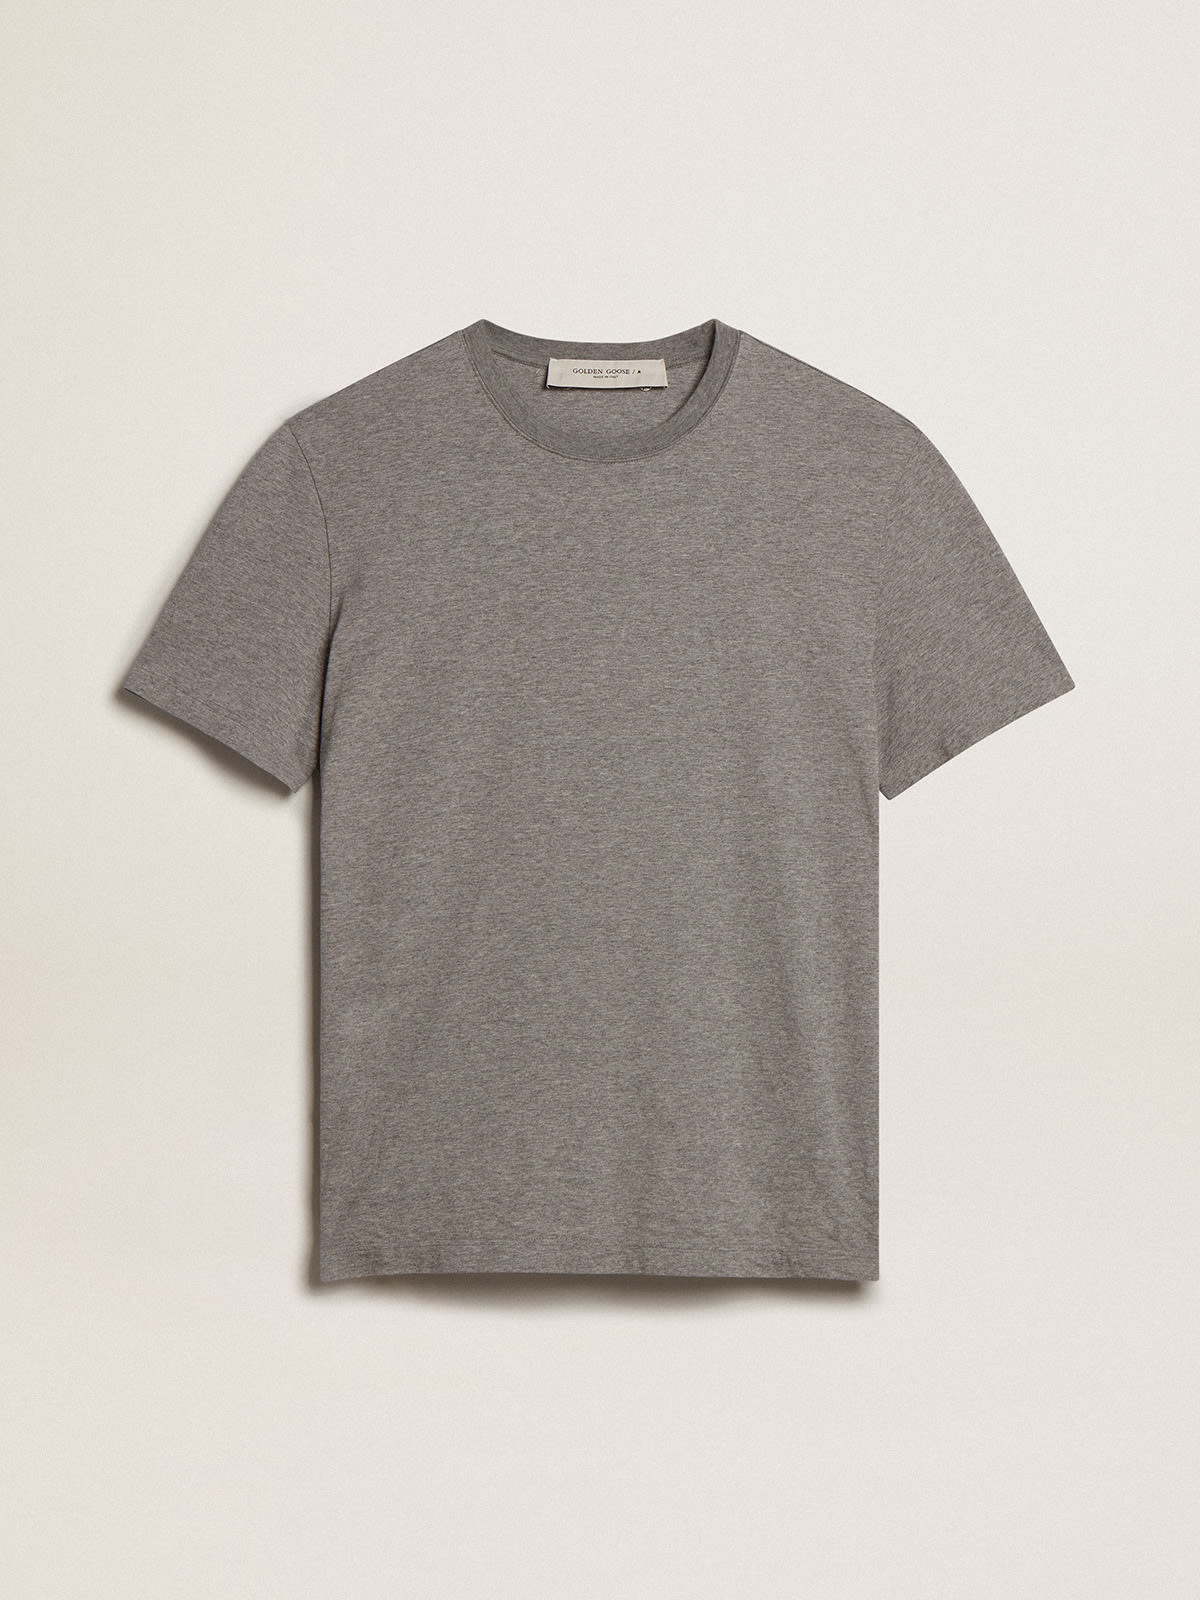 Golden Goose - T-shirt in cotone color grigio melange con manifesto sul retro in 